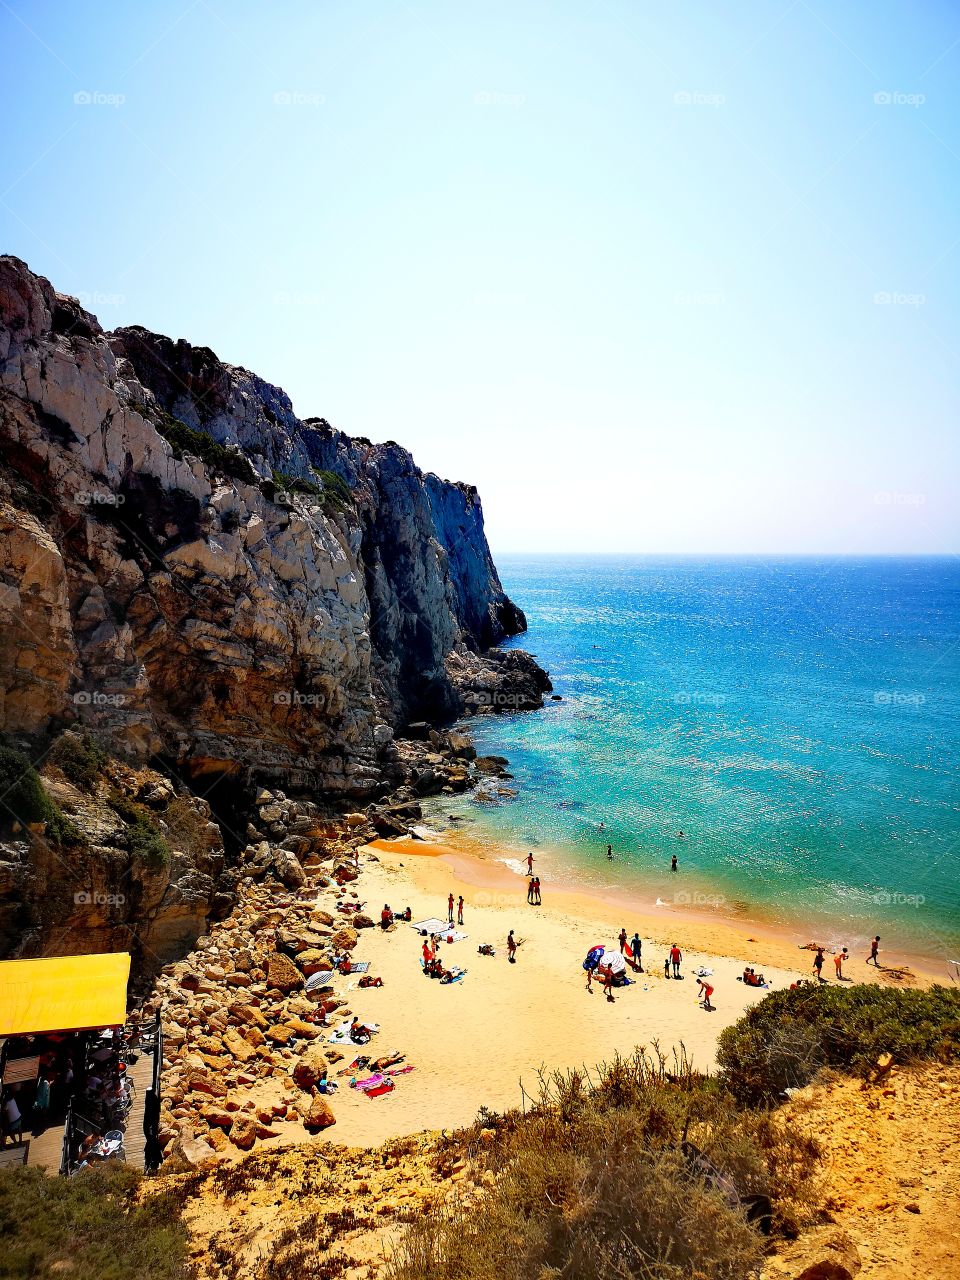 View of the Algarve